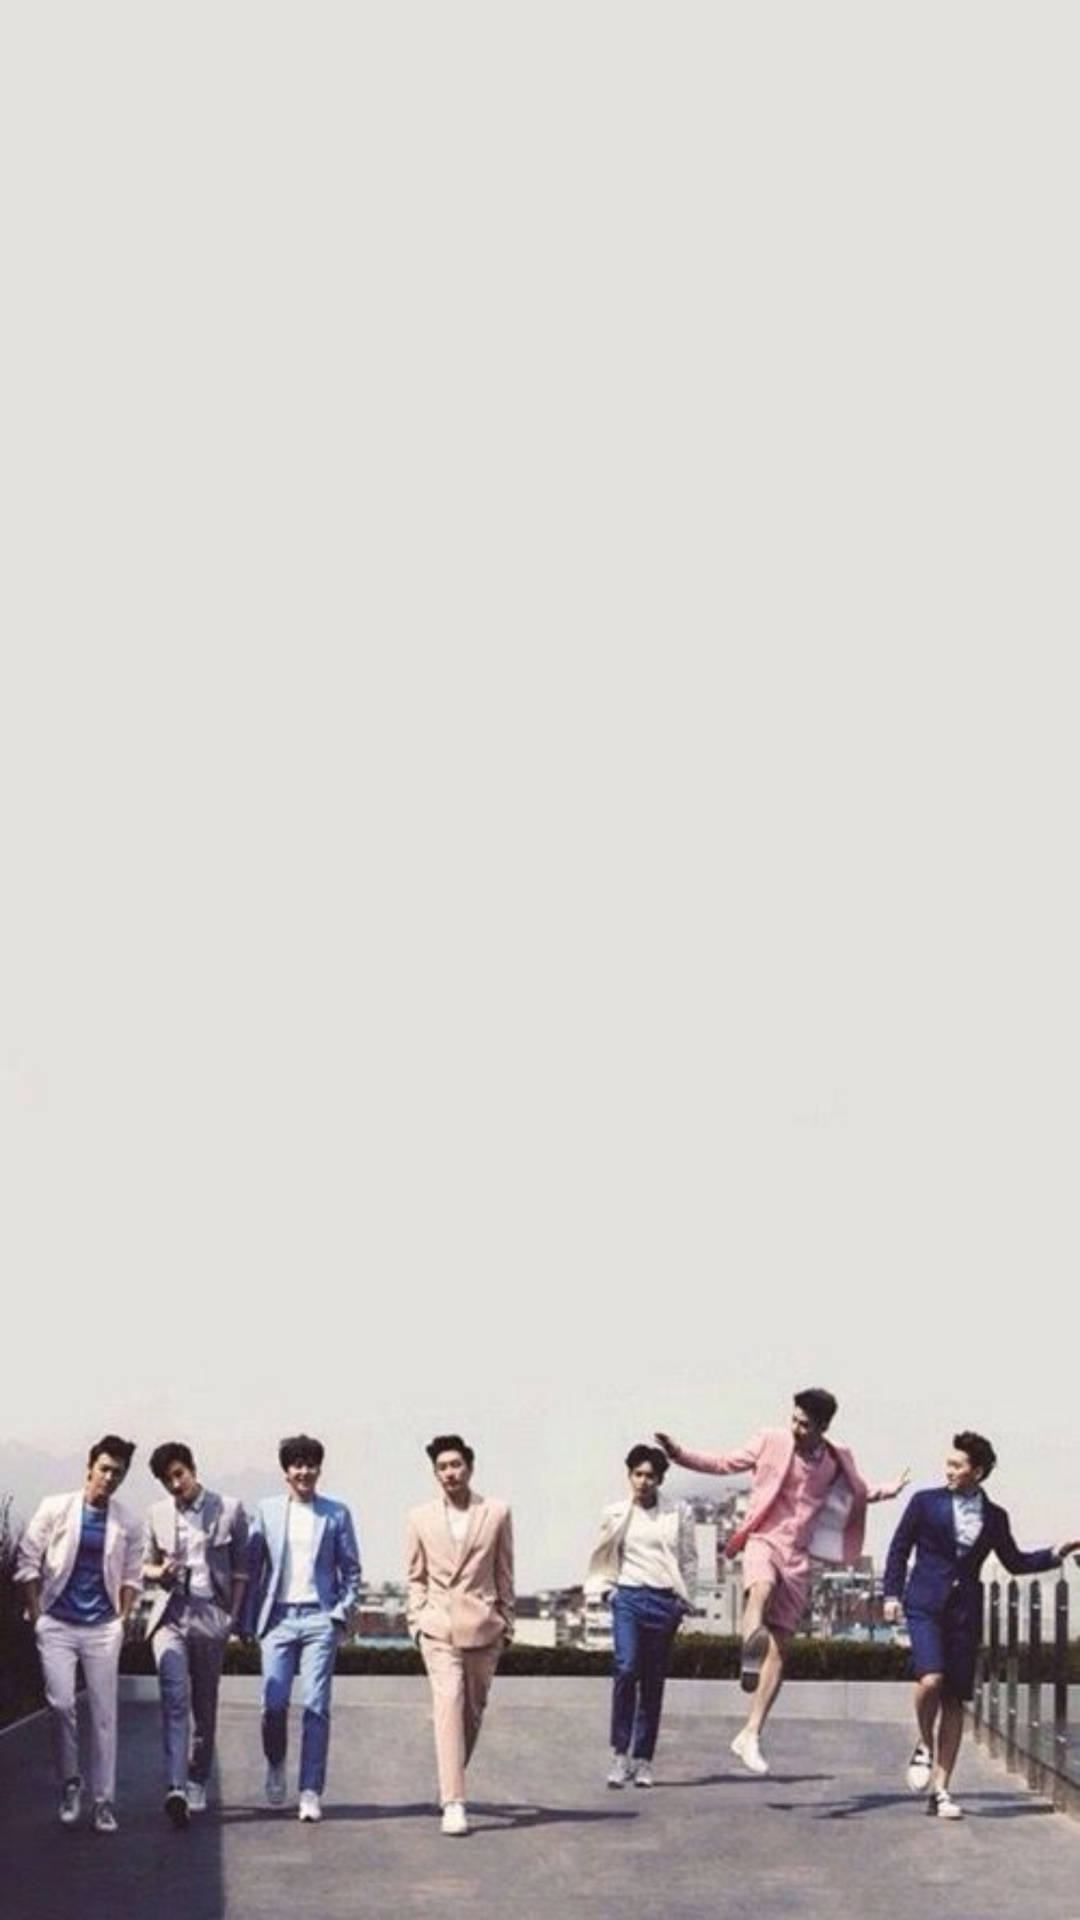 Super Junior Street Photo Wallpaper